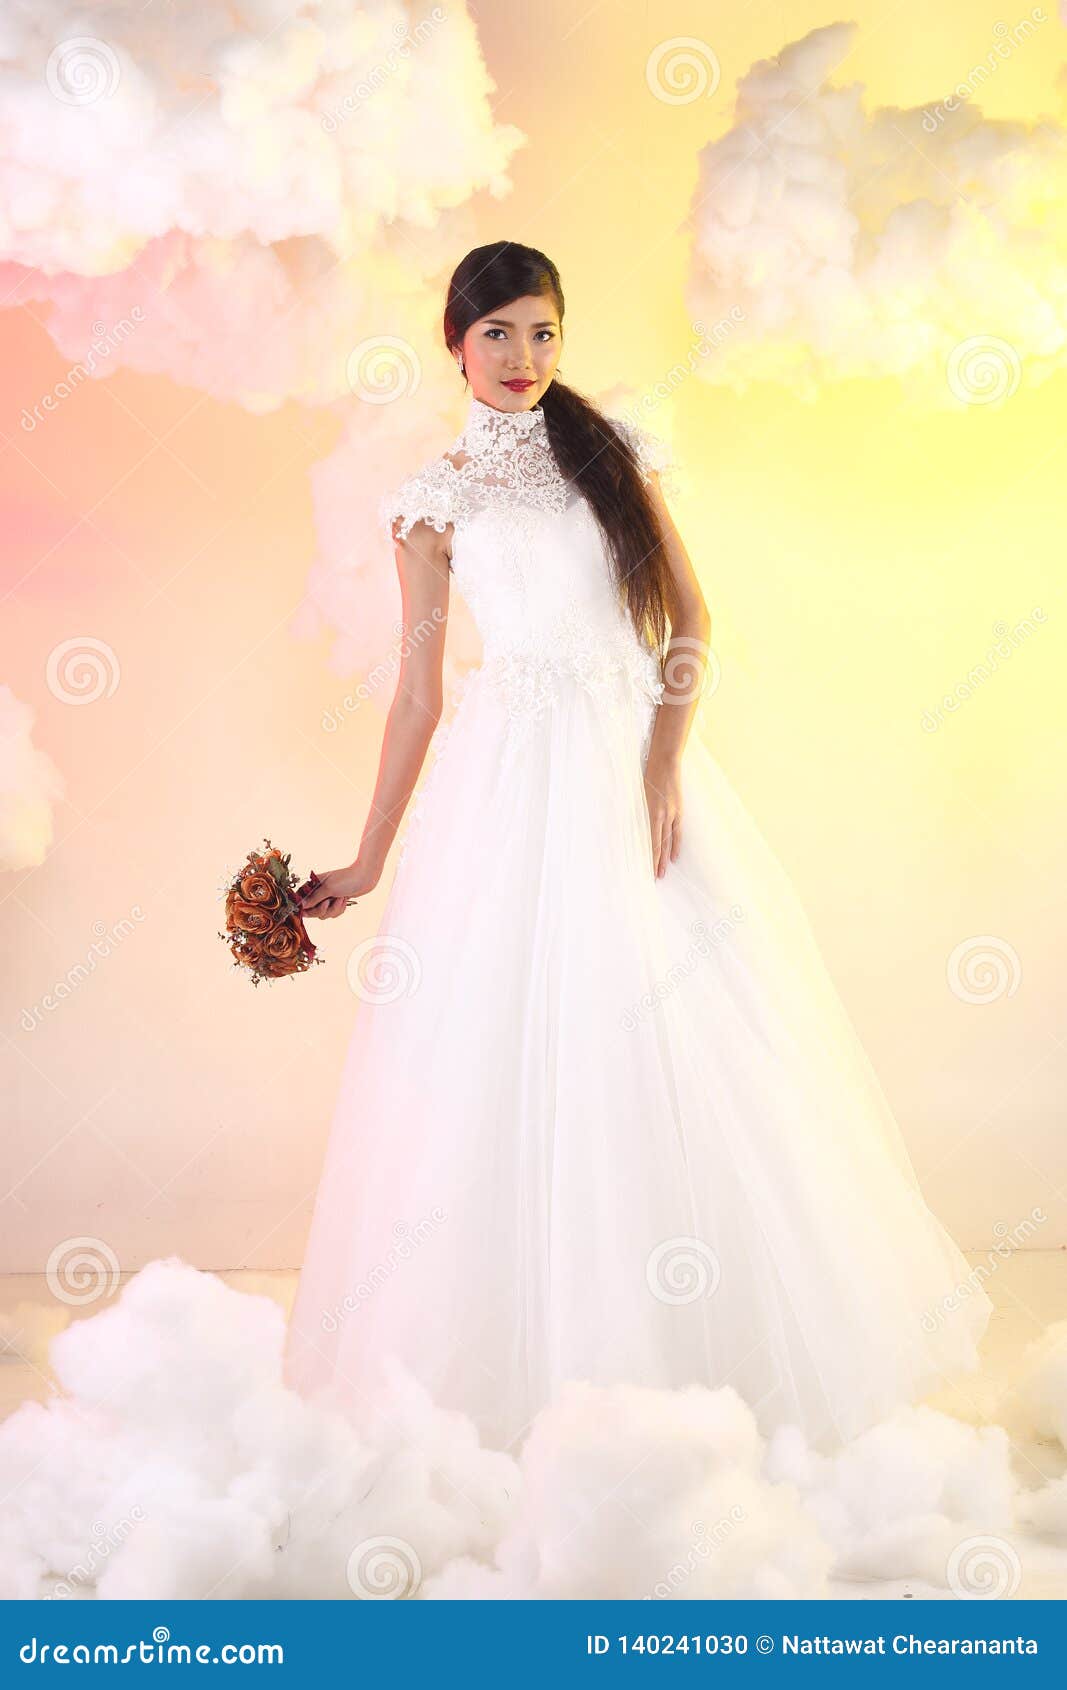 https://thumbs.dreamstime.com/z/lovely-asian-beautiful-woman-bride-white-wedding-gown-dress-lace-veil-black-hair-studio-lighting-yellow-orange-gradient-140241030.jpg